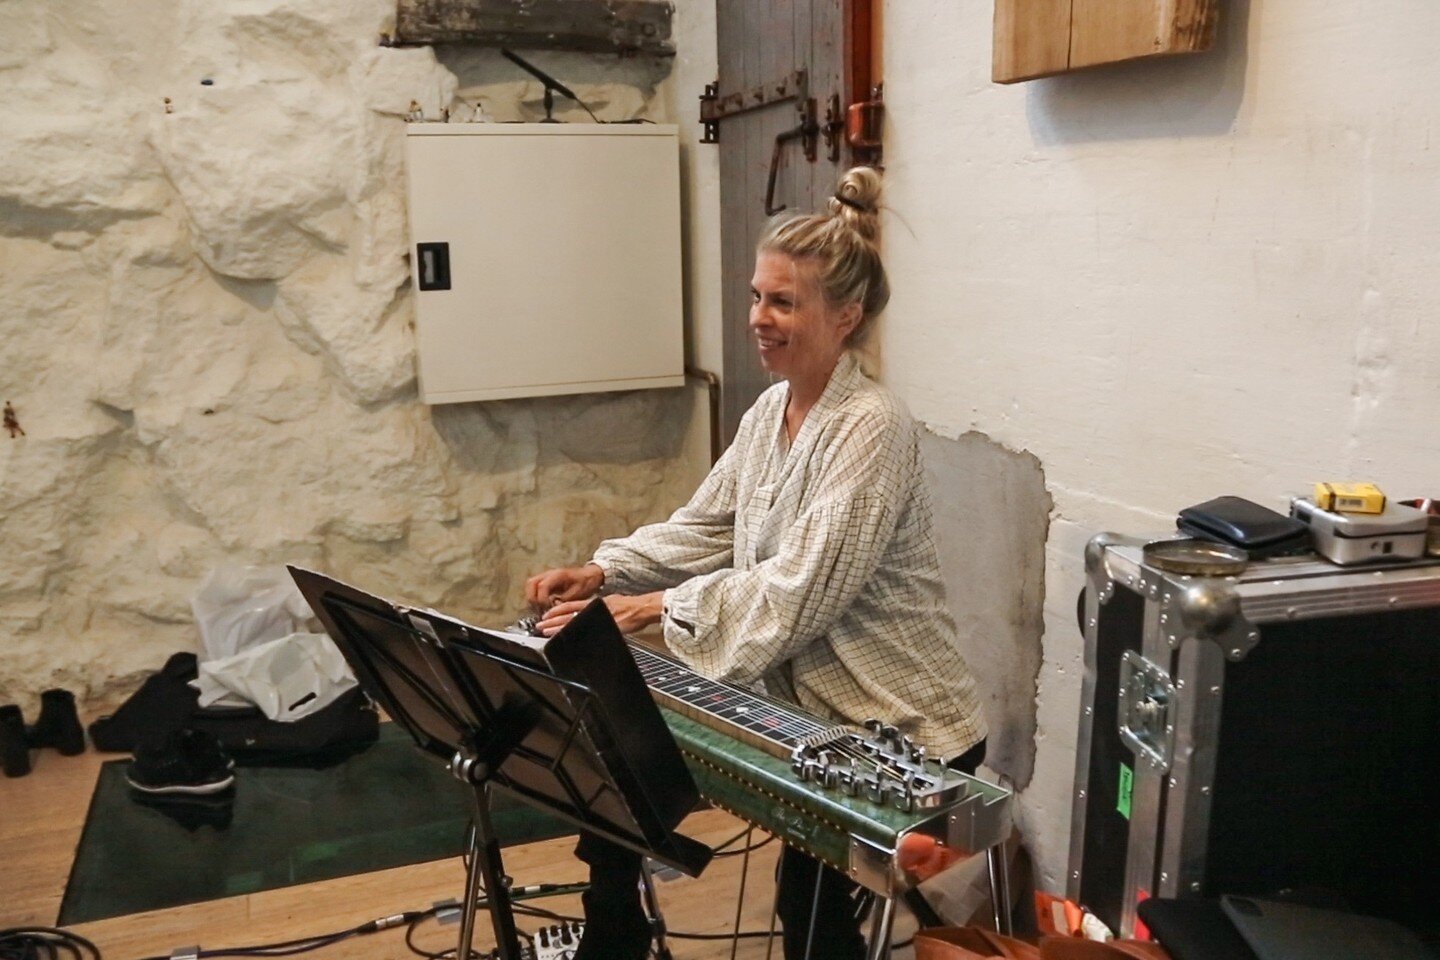 Maggie recording in Studio Bloch, Faroe Islands. From the recordings of our debut album ...eftir⁠
⁠
@maggiebjorklundmusic #studiobloch #recordingstudio #pedalsteelguitar